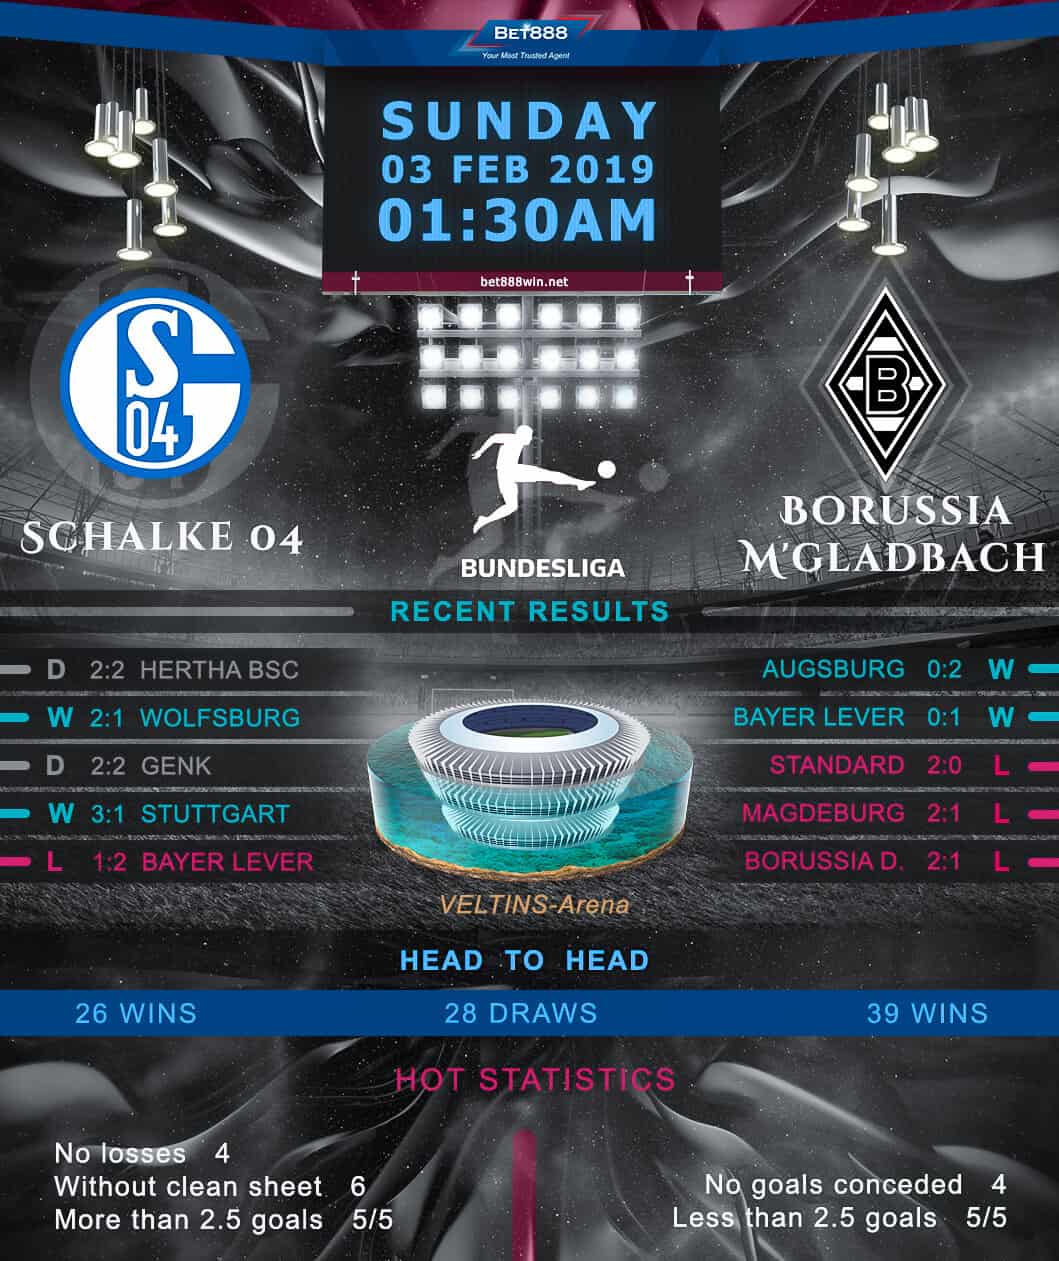 Schalke 04 vs Borussia Monchengladbach 03/02/19